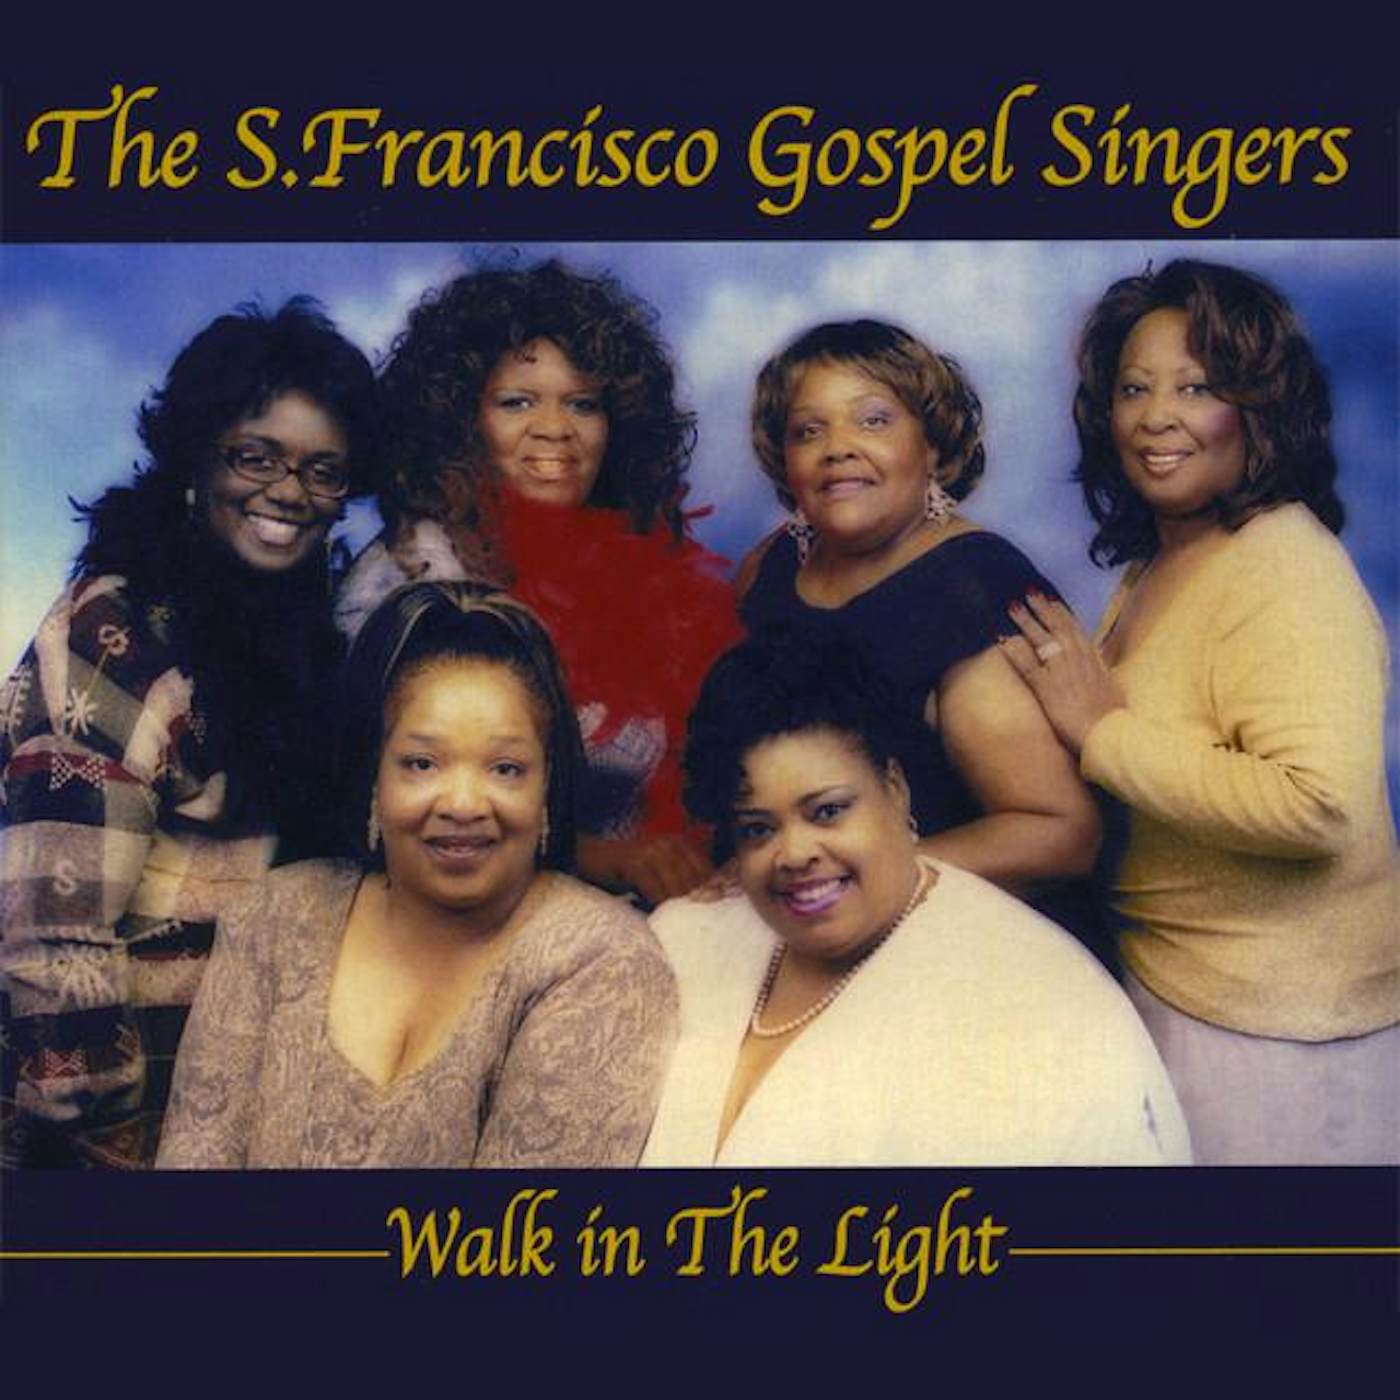 The S.Francisco Gospel Singers